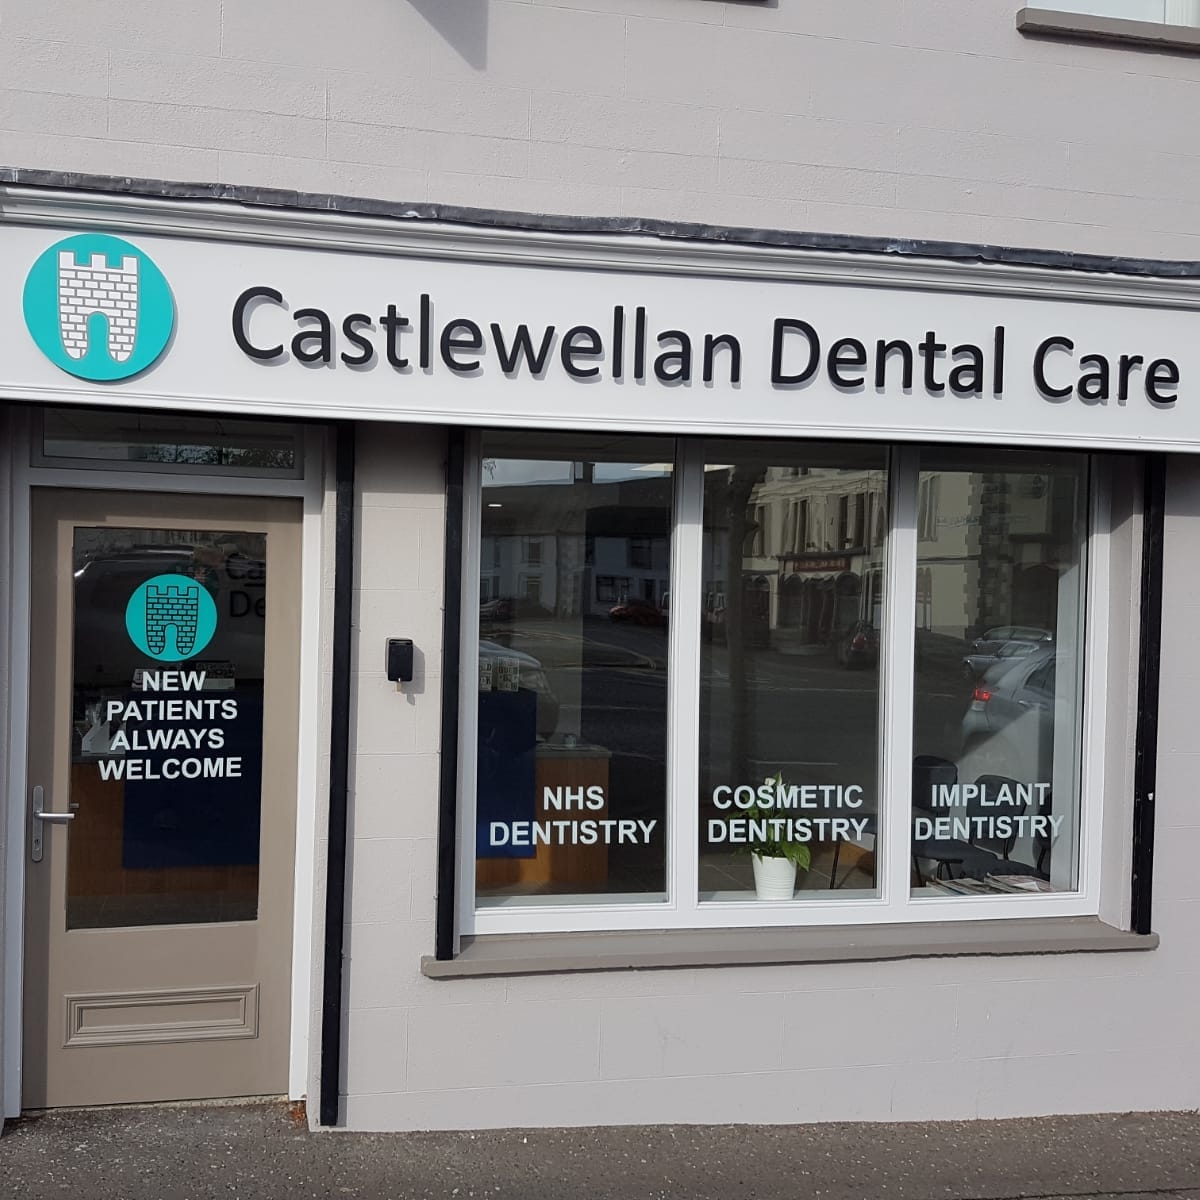 Castlewellan Dental Practice